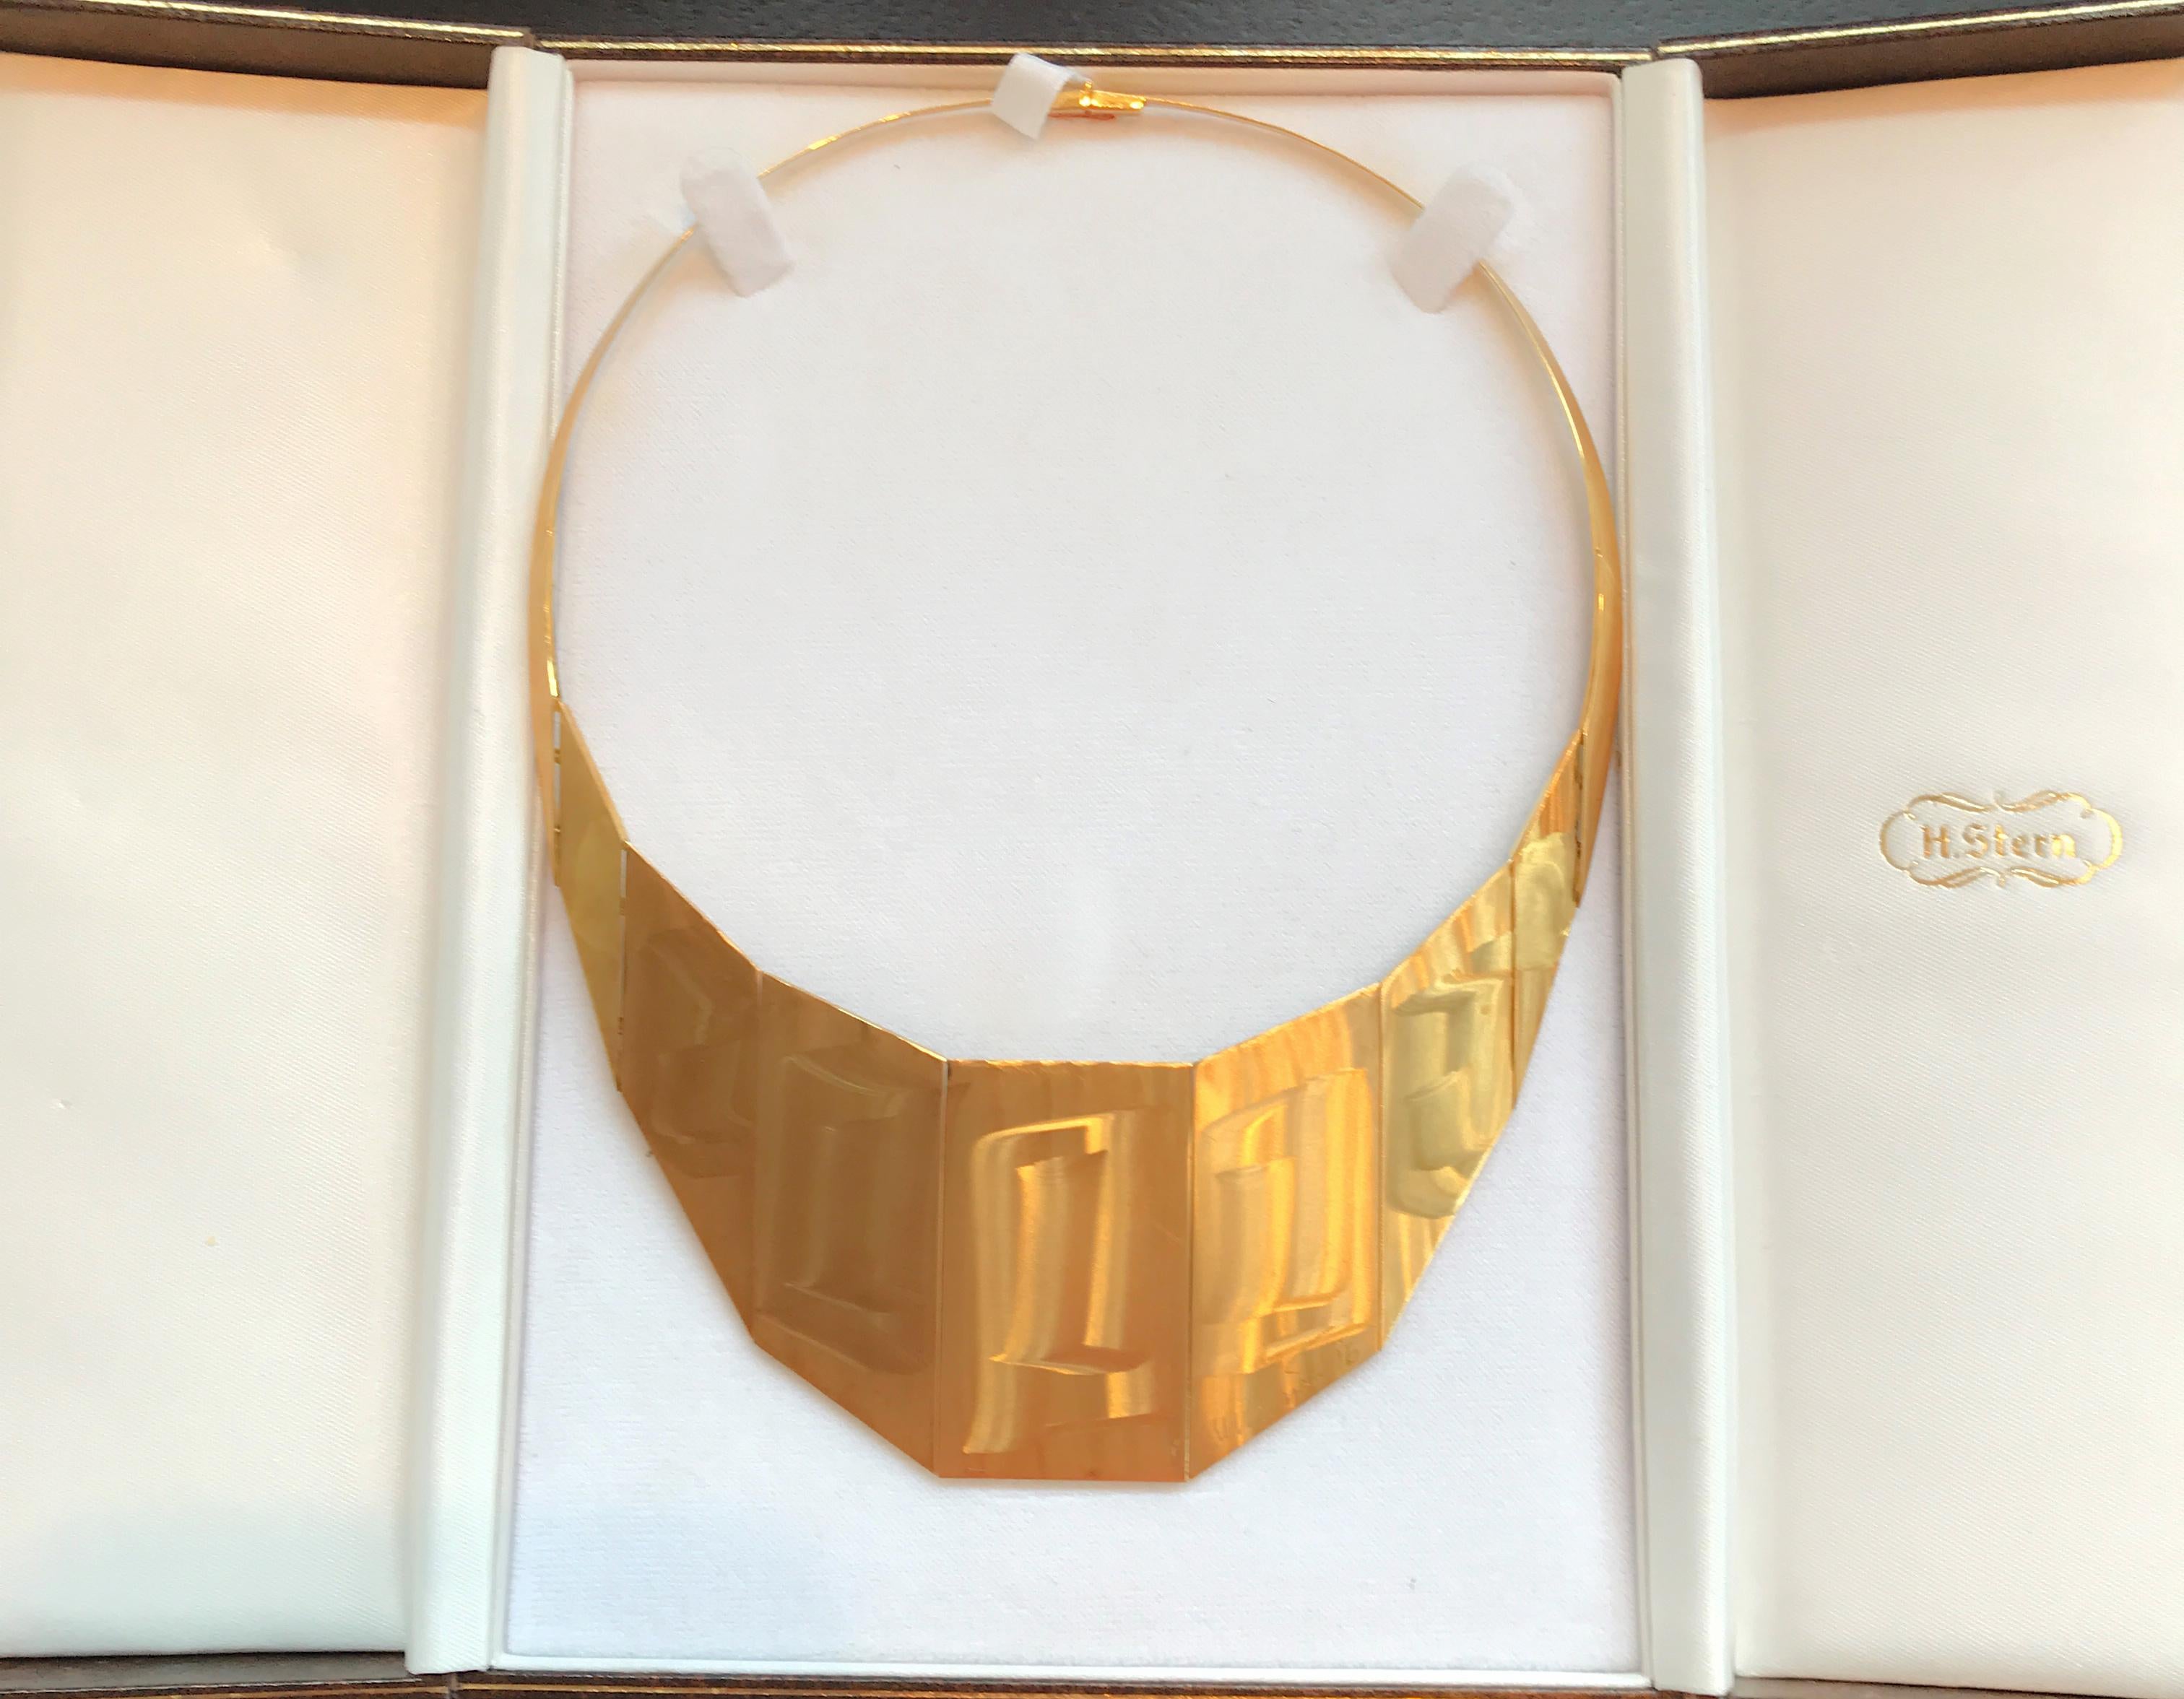 H Stern & Roberto Moriconi 18 Karat Yellow Gold Bib Necklace For Sale 4